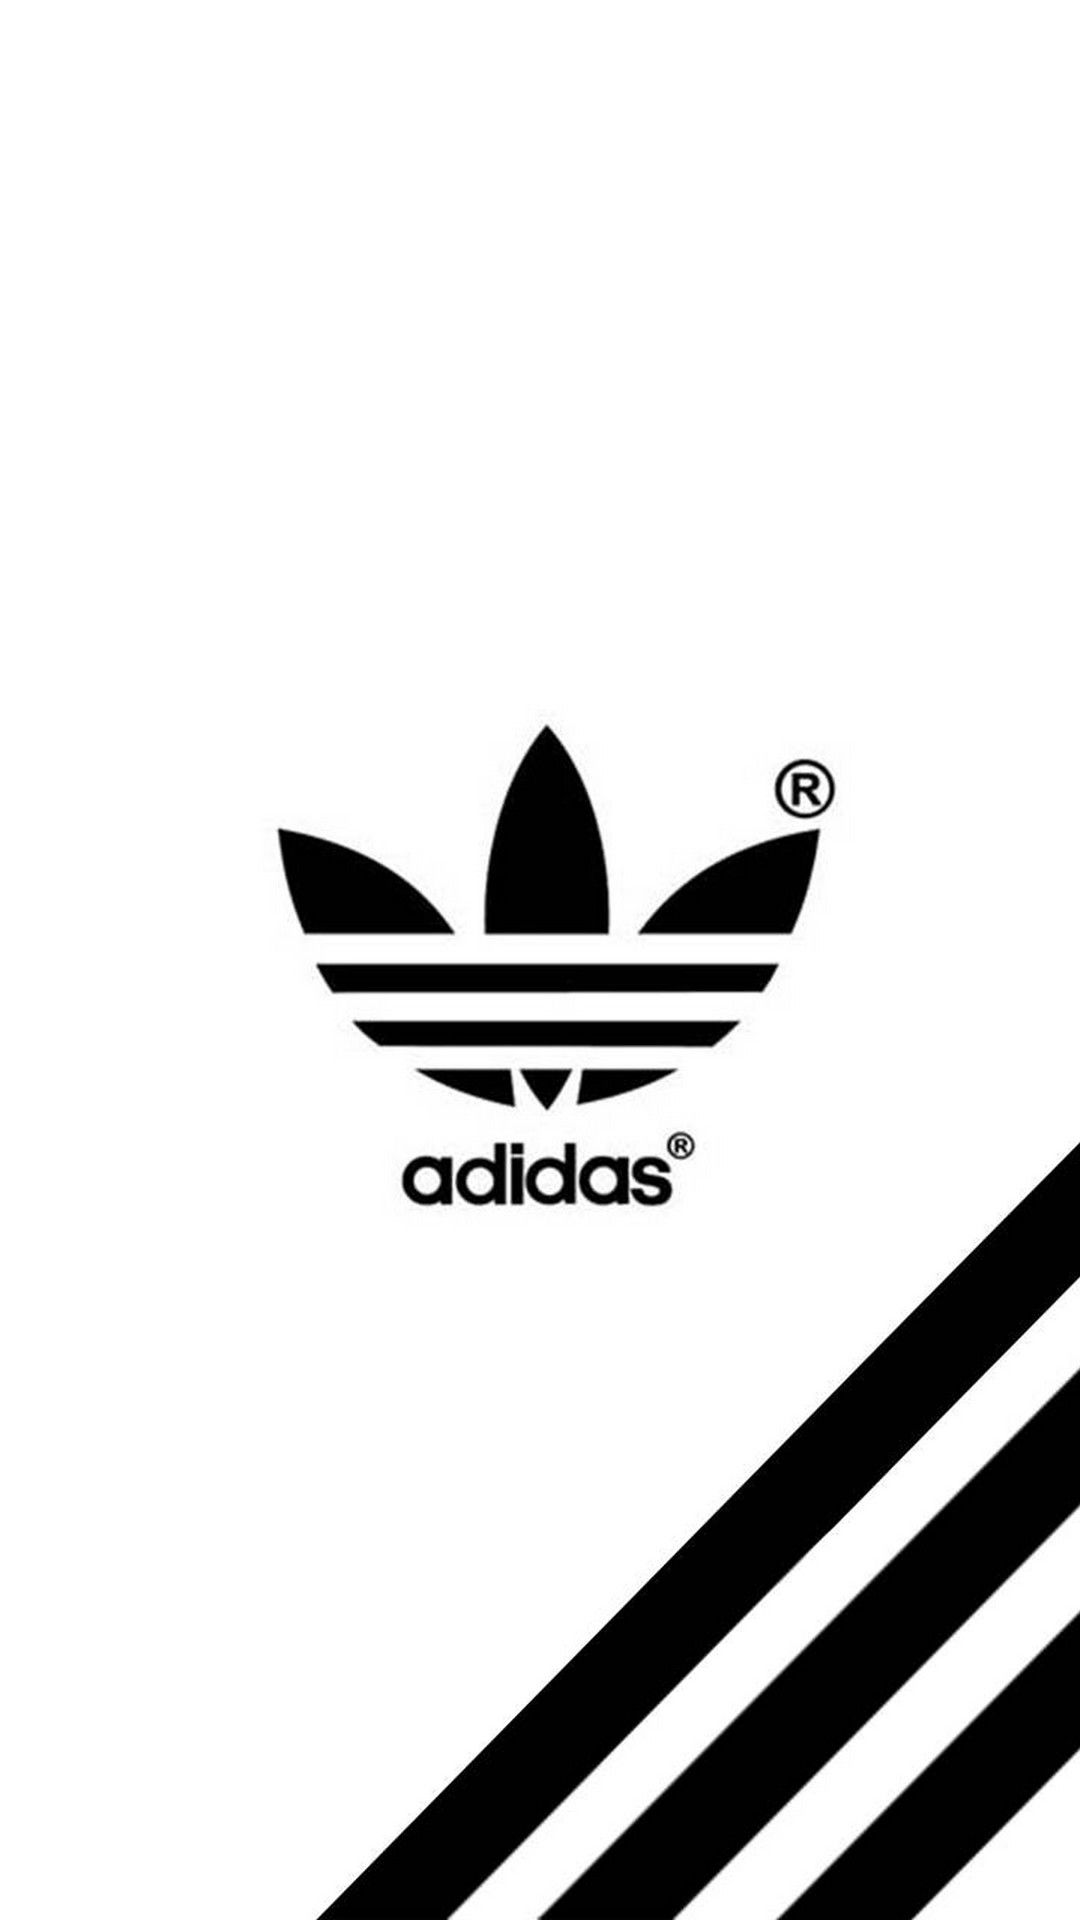 Adidas Logo Wallpaper For iPhone 3D iPhone Wallpaper